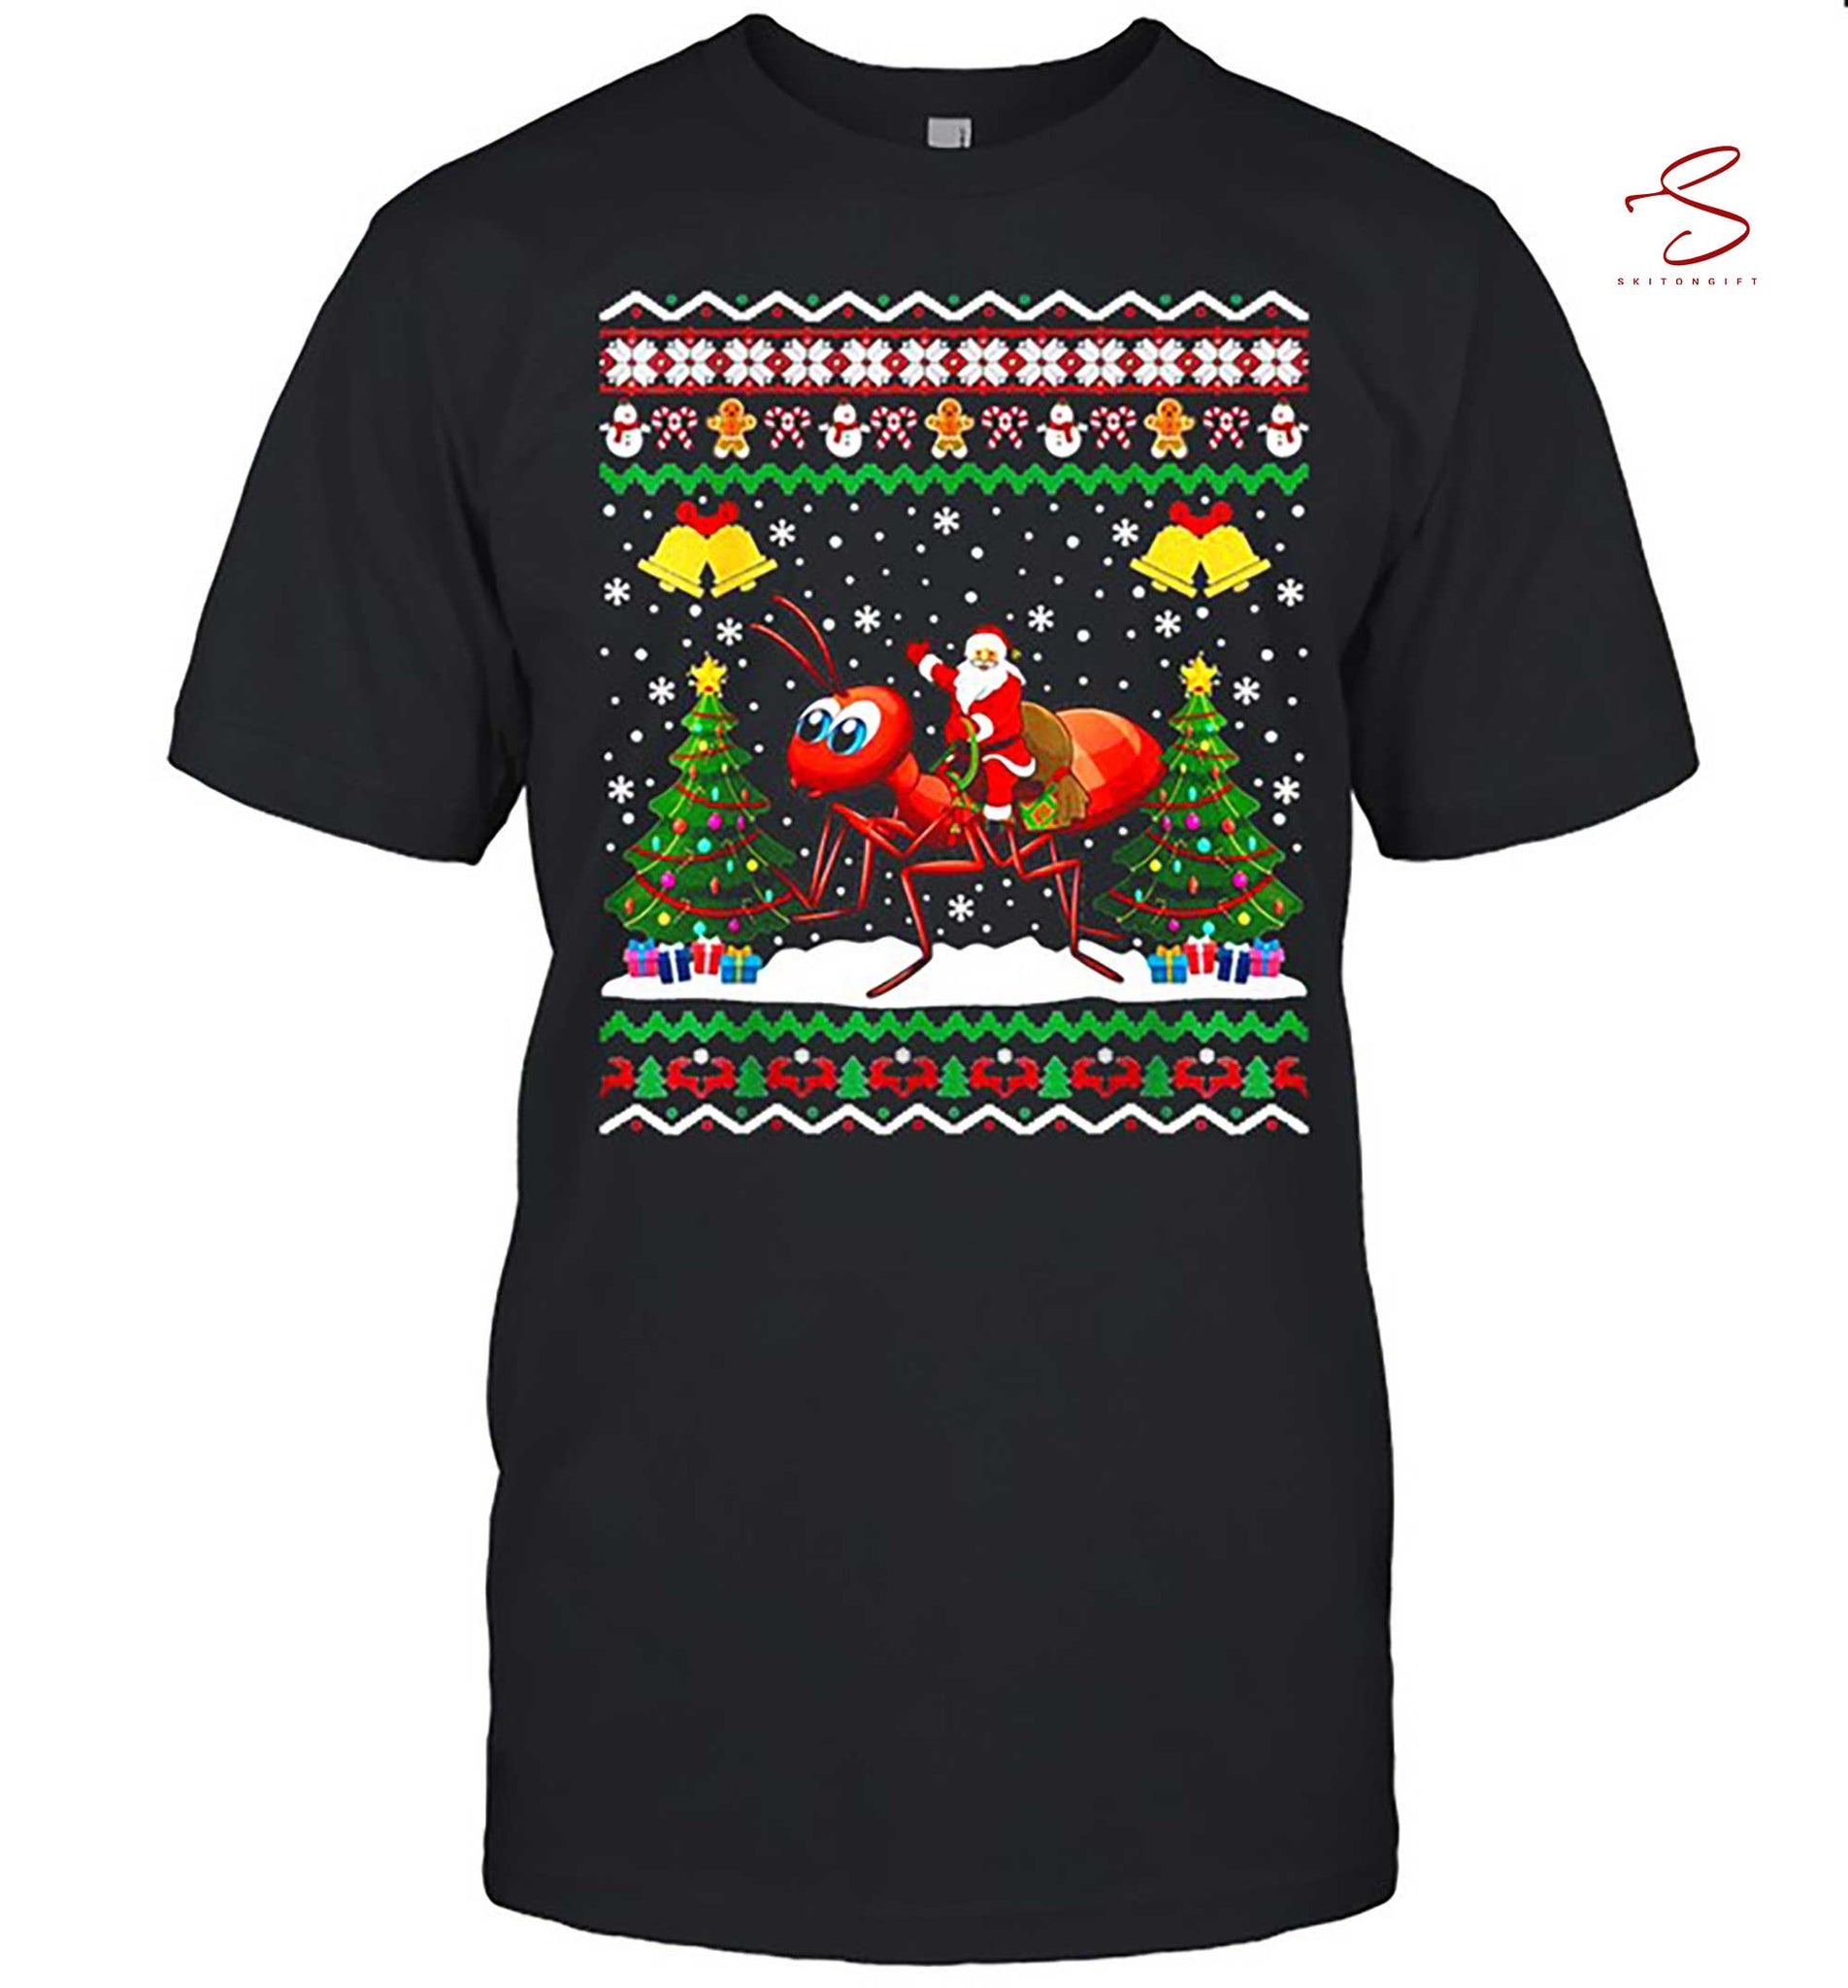 Skitongift Ants Santa Riding Ant Christmas Sweater T Shirt